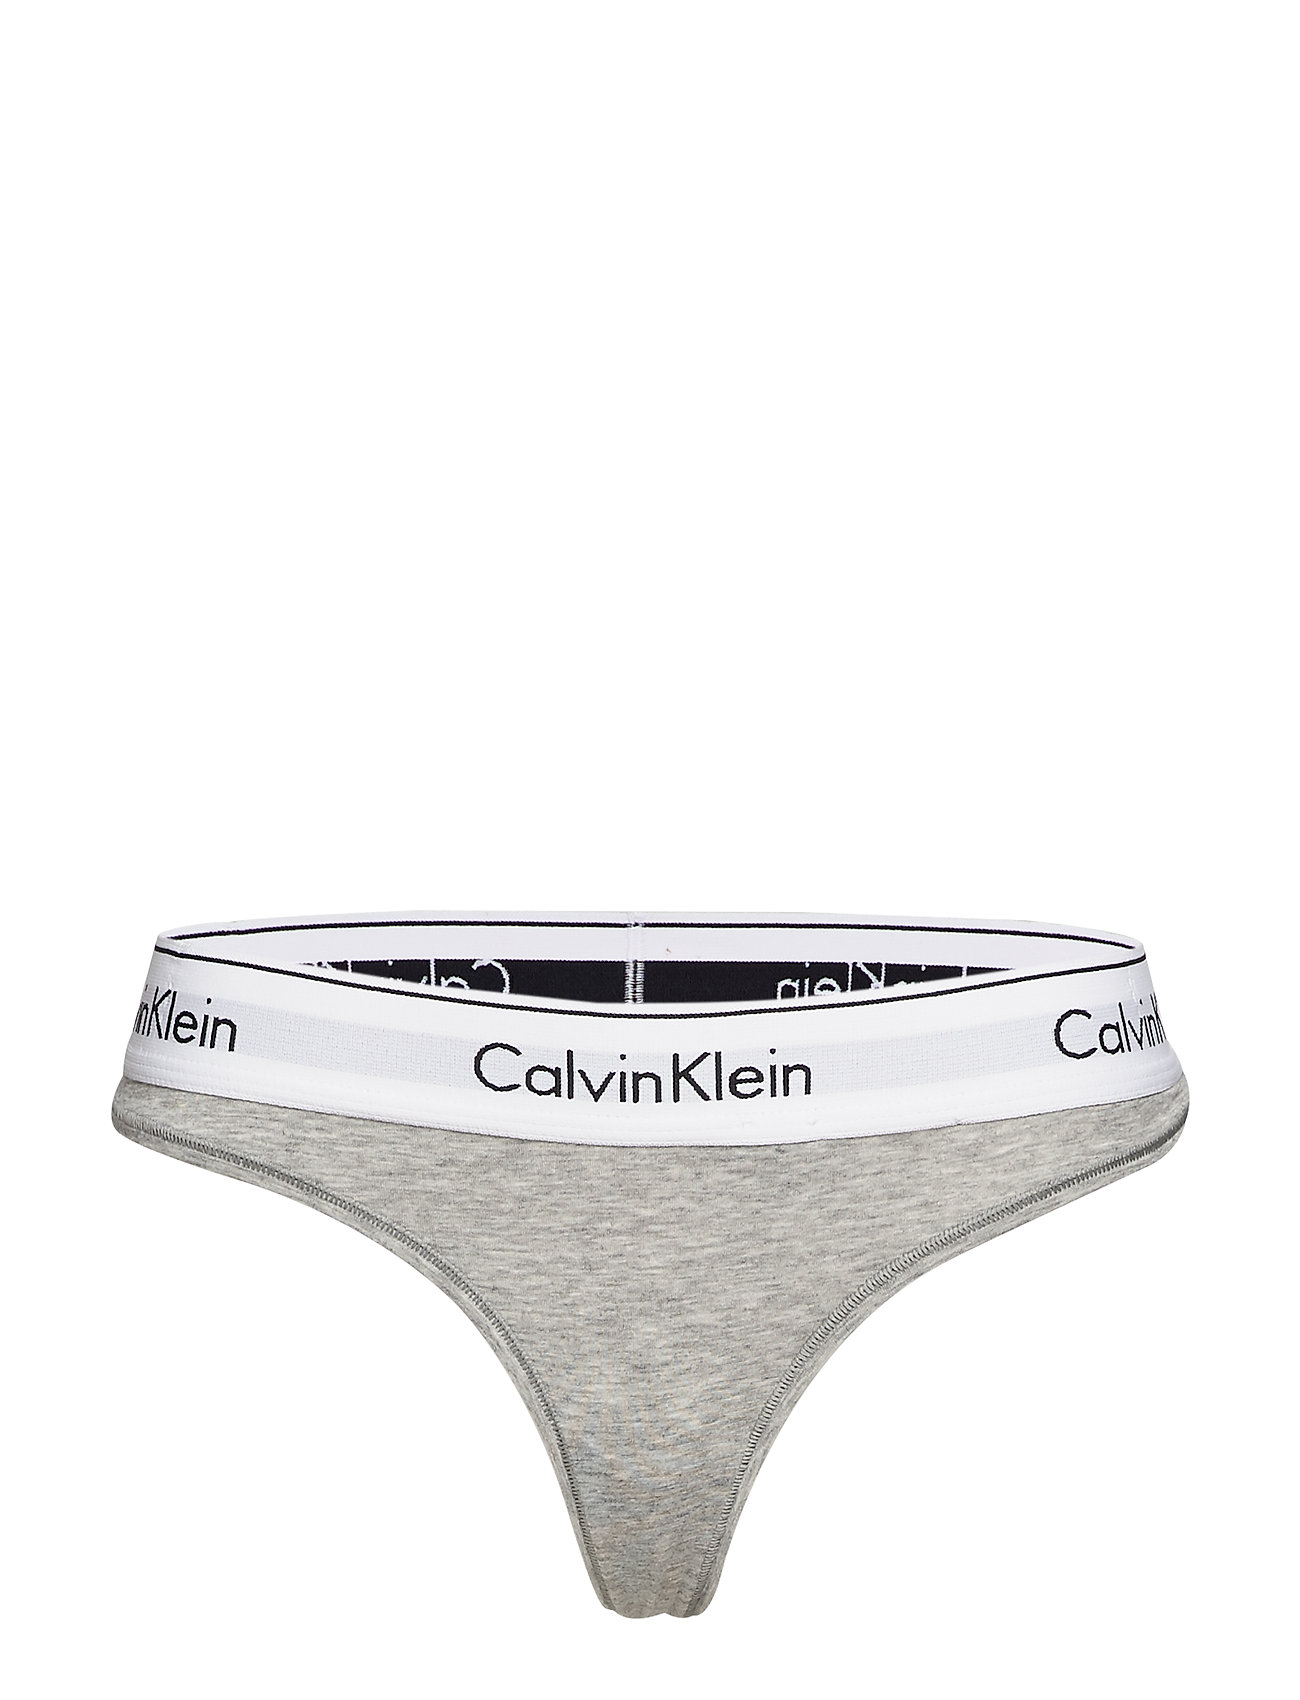 Thong Stringit Alusvaatteet Harmaa Calvin Klein